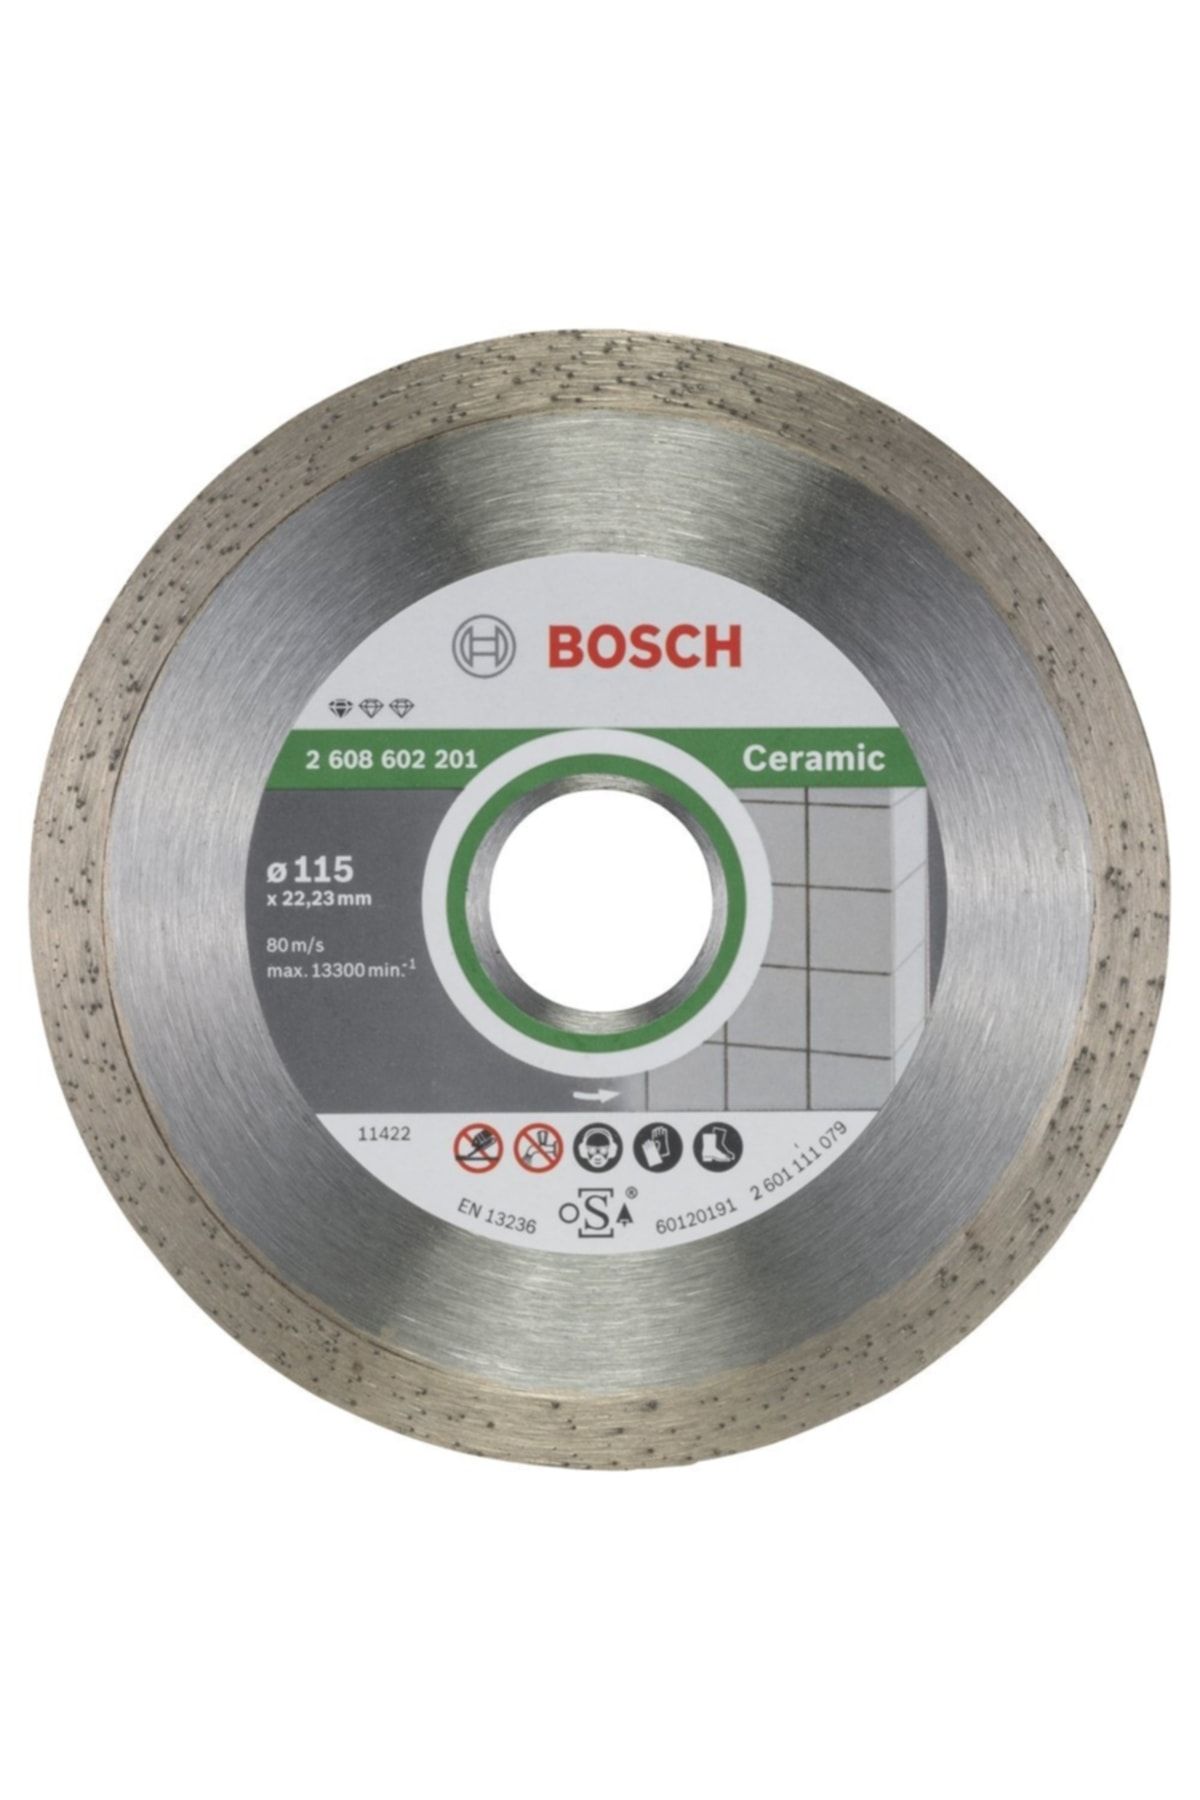 Bosch Standard For Ceramic 115 Mm Elmas Kesme Diski - 2608602201.